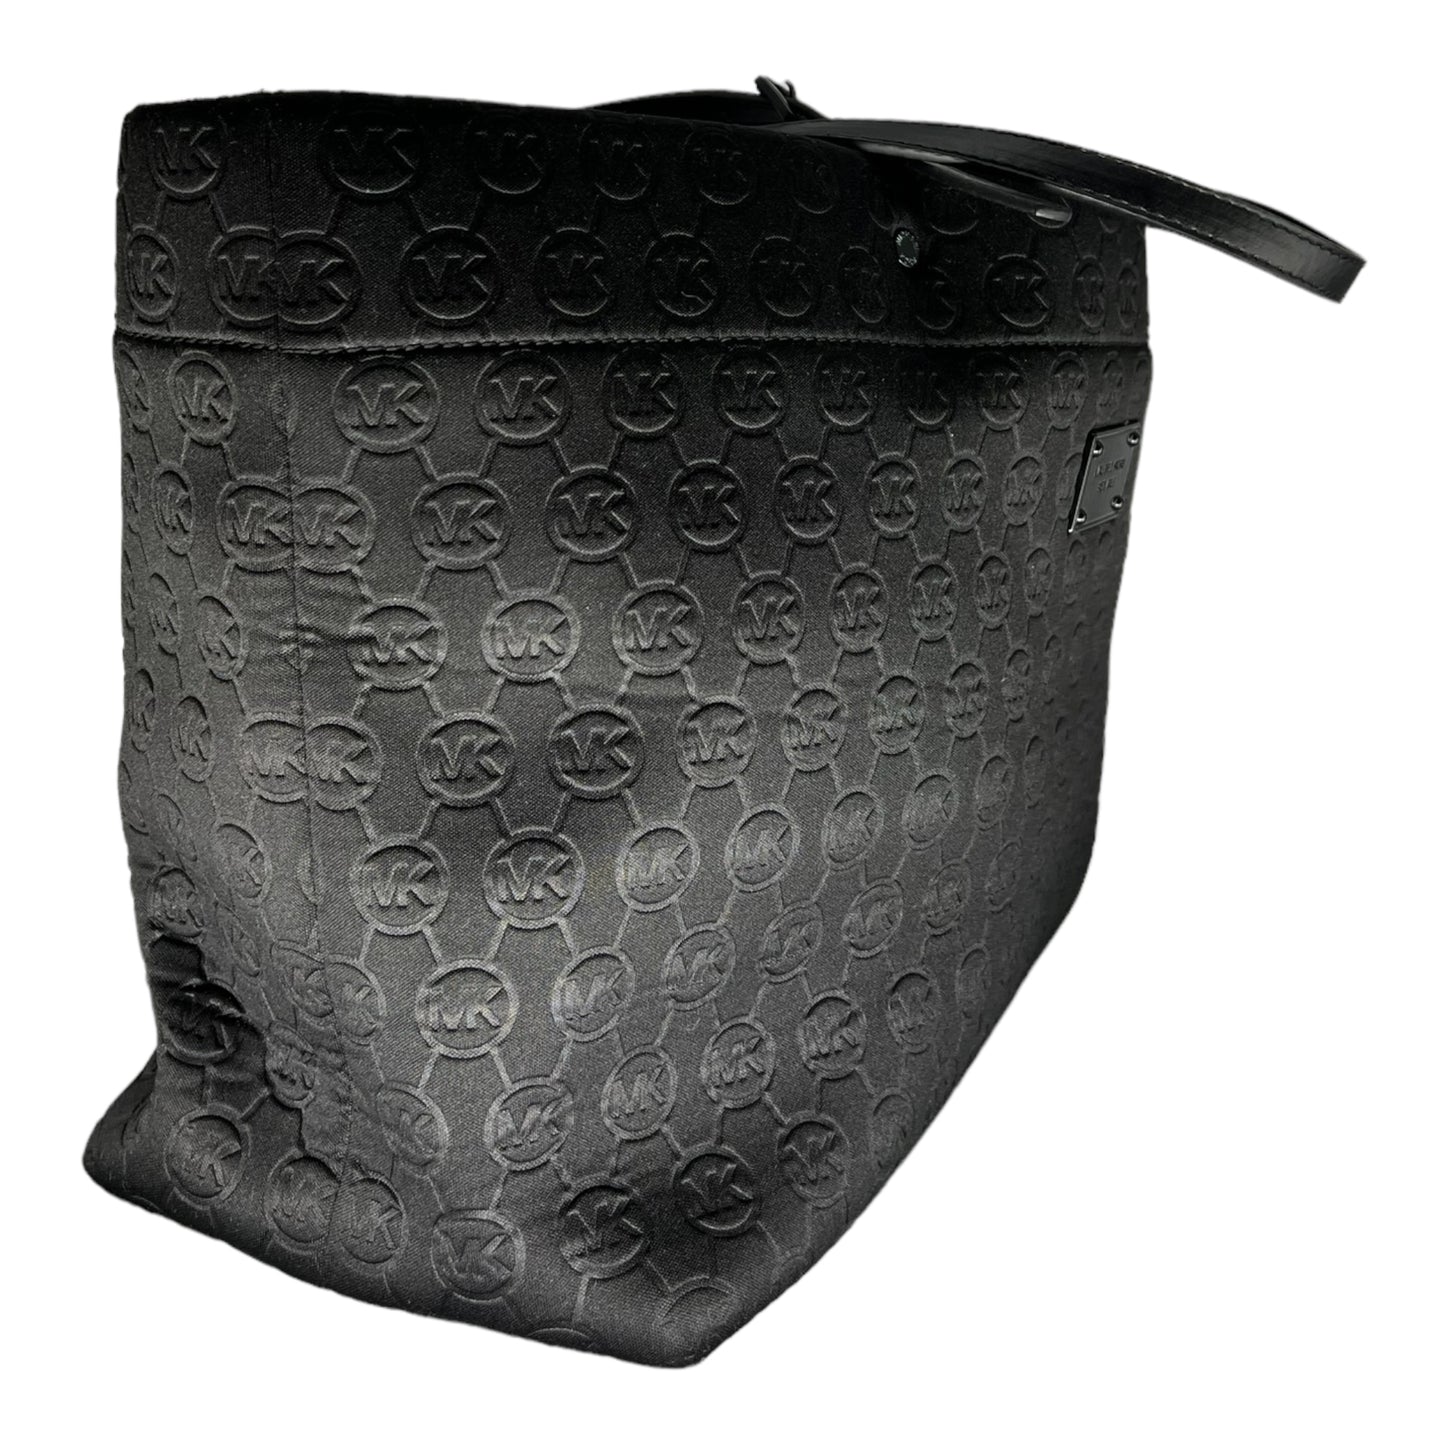 Michael Kors Large Black Neoprene Fabric Tote Bag